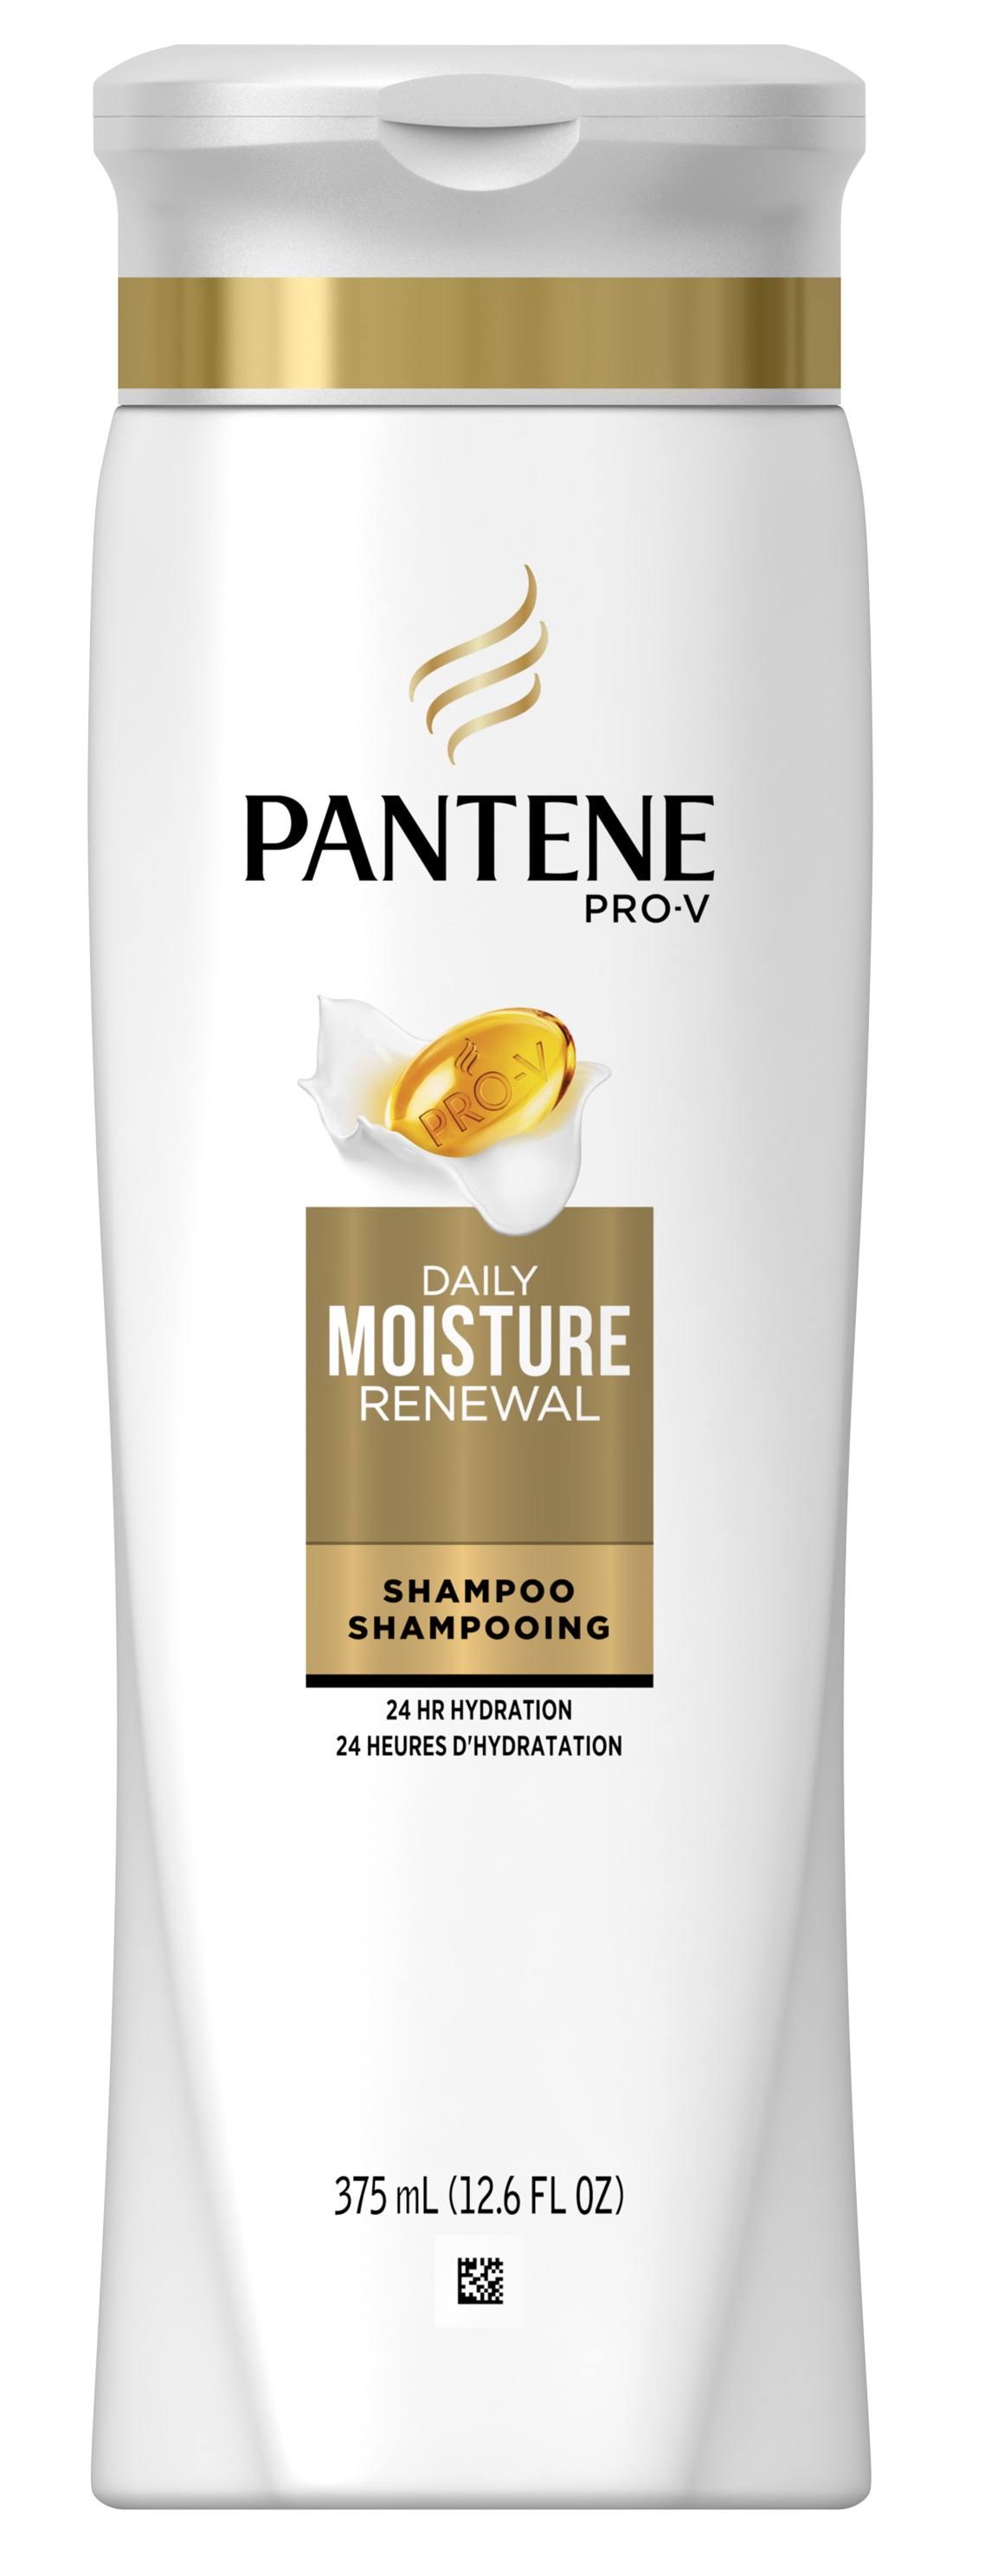 Pantene Pro V Daily Moisture Renewal Shampoo - 375ml